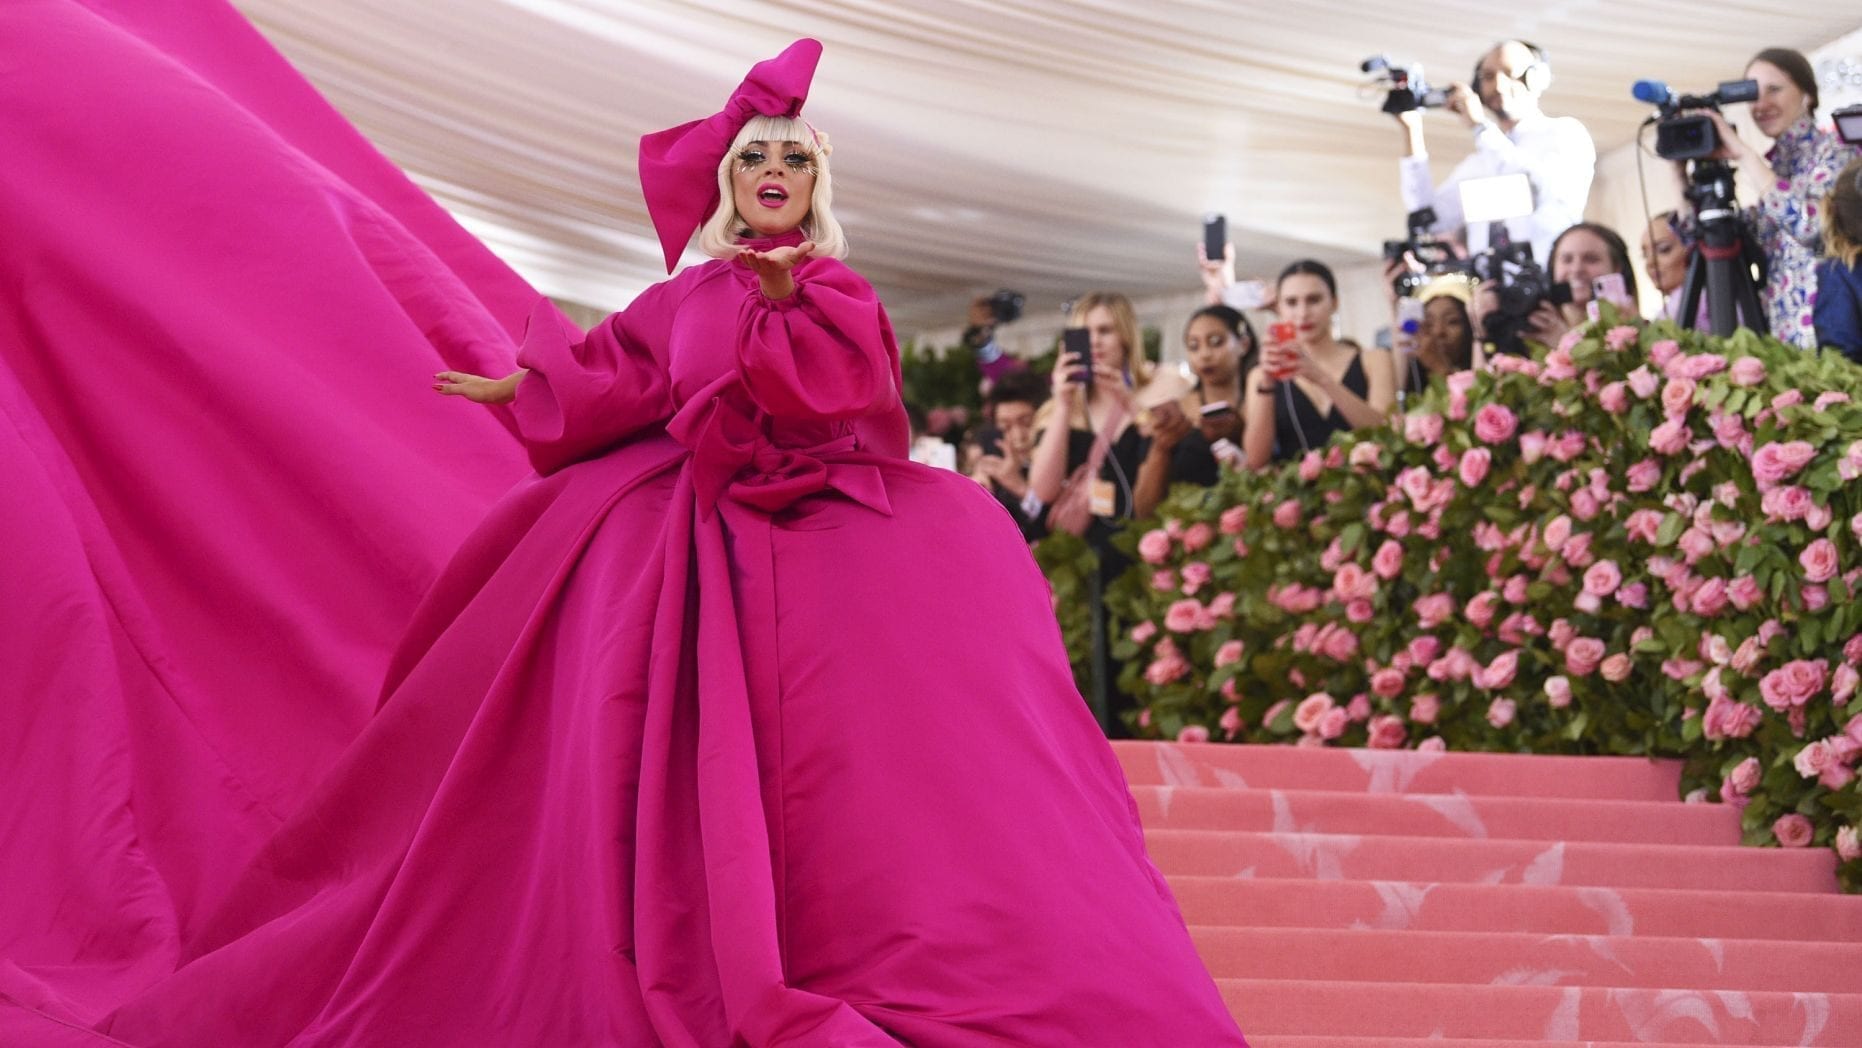 Lady Gaga’s AMAZING entrance into the Met Gala 2019